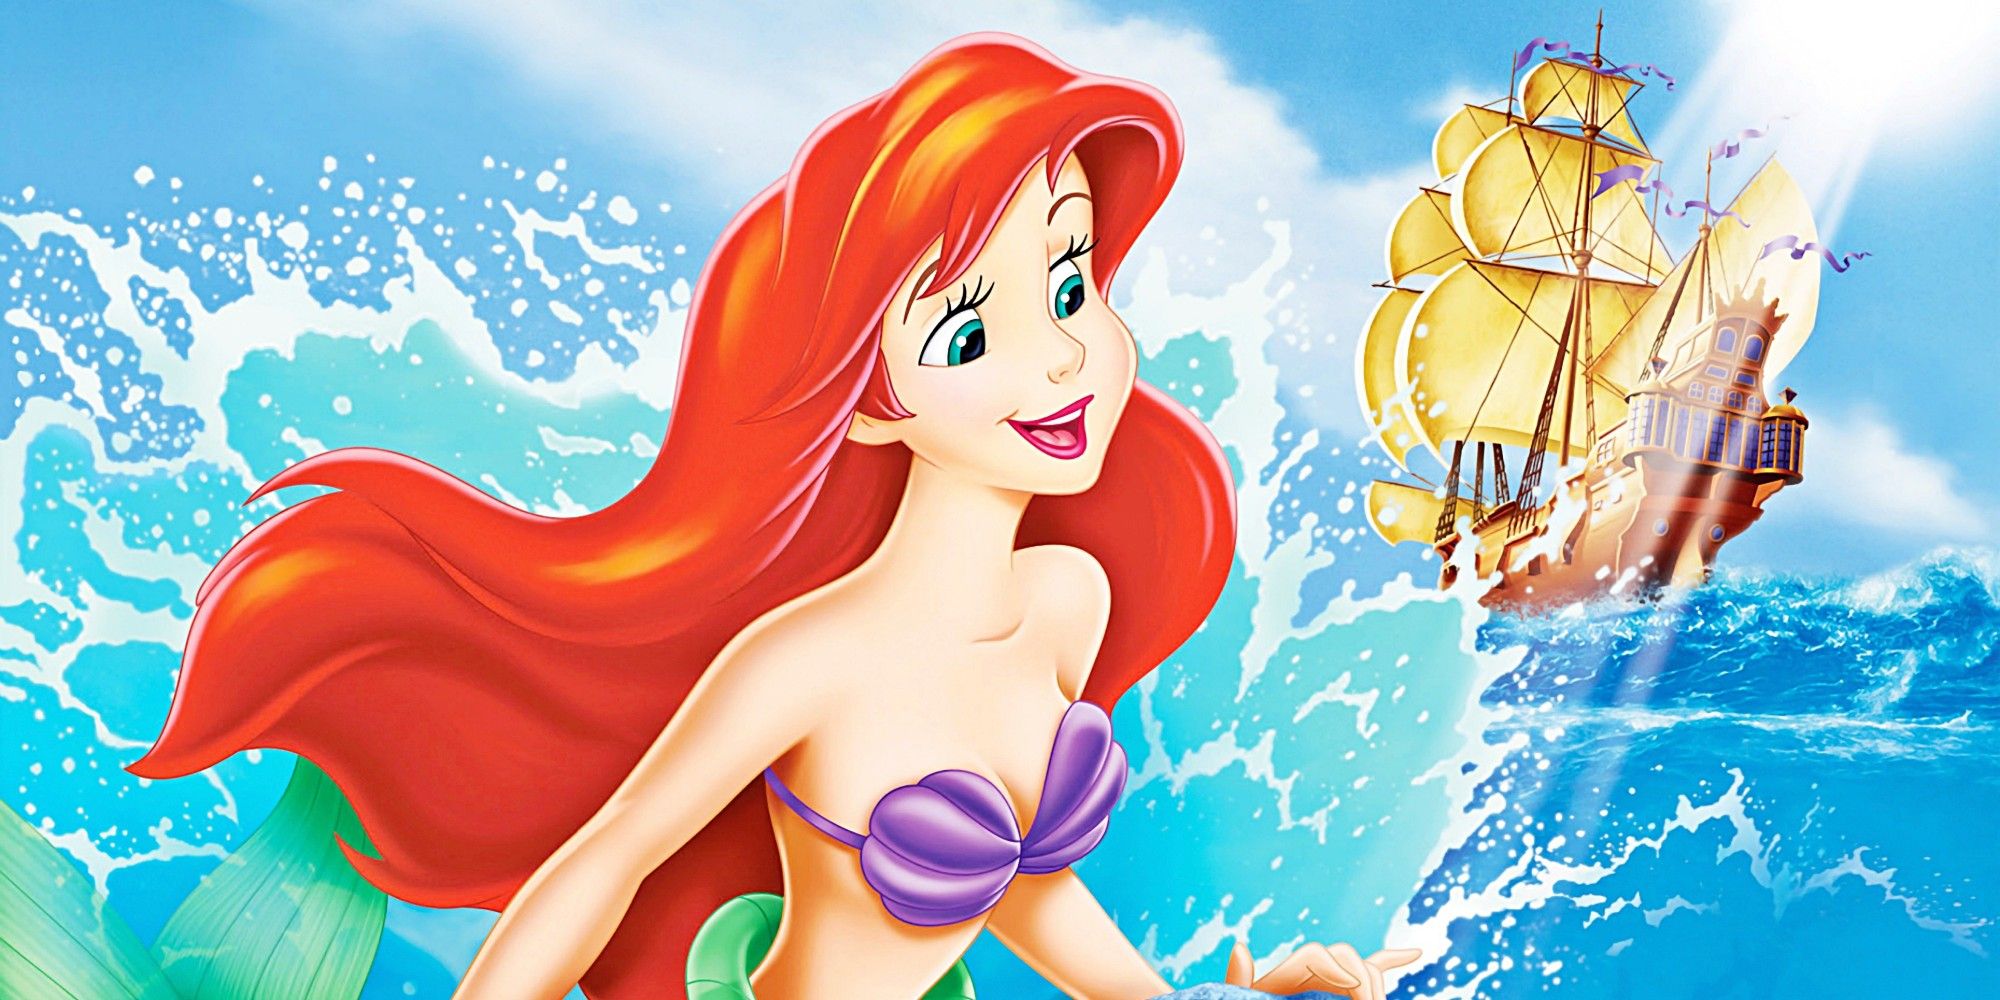 Ariel in the water in Disney's animated Little Mermaid